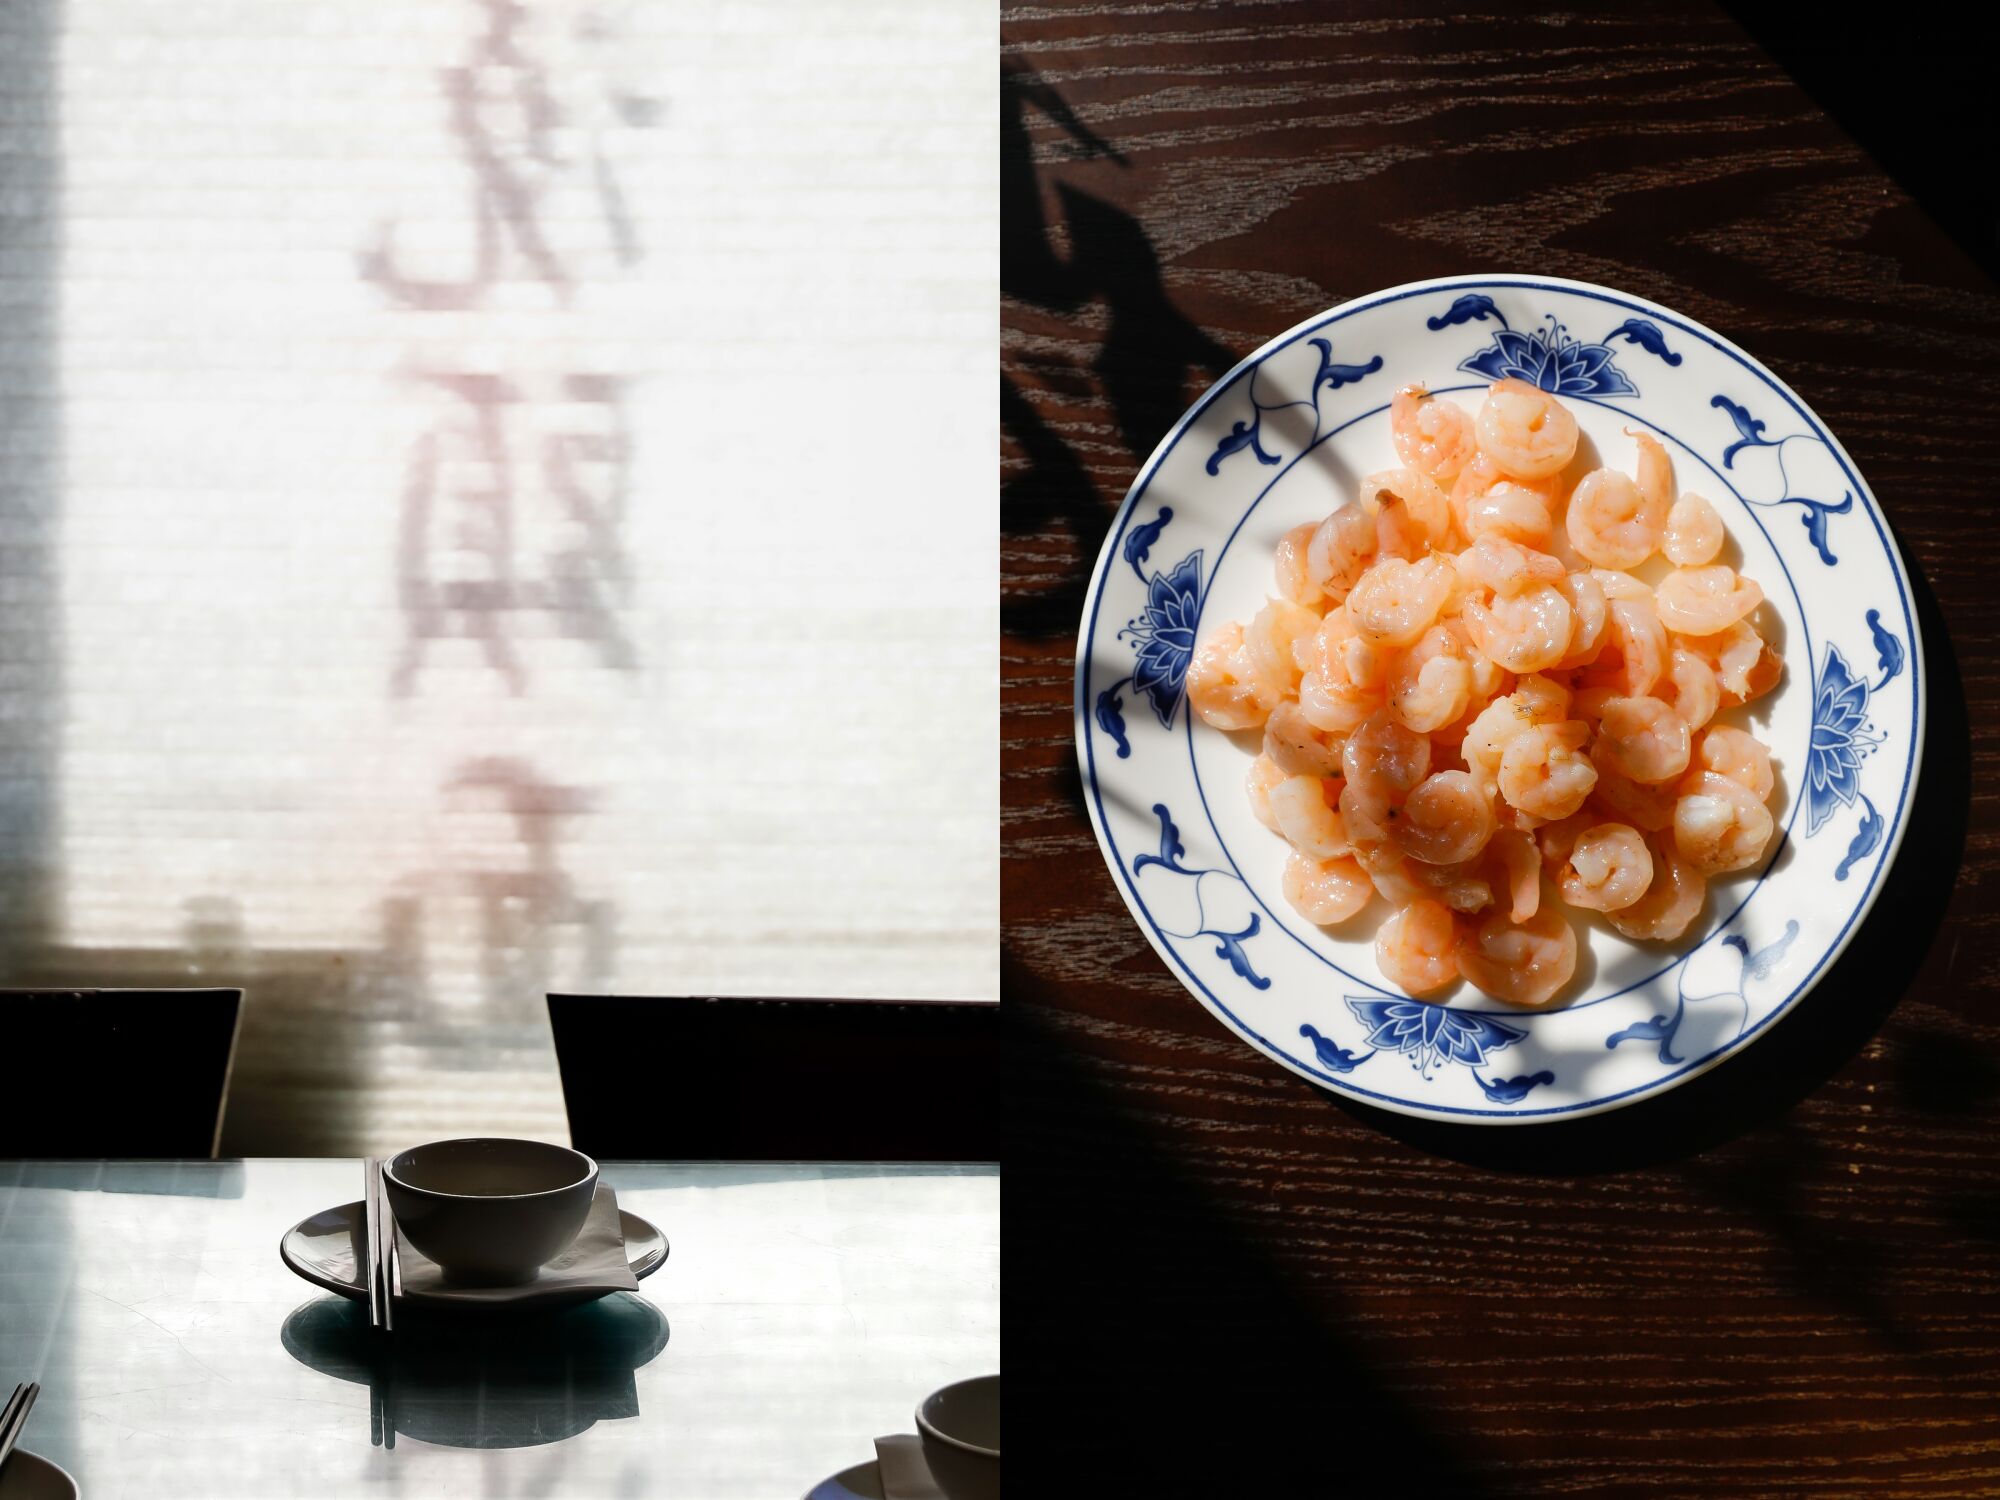 A table setting at WangJia restaurant, left, their stir fry shrimp, right.